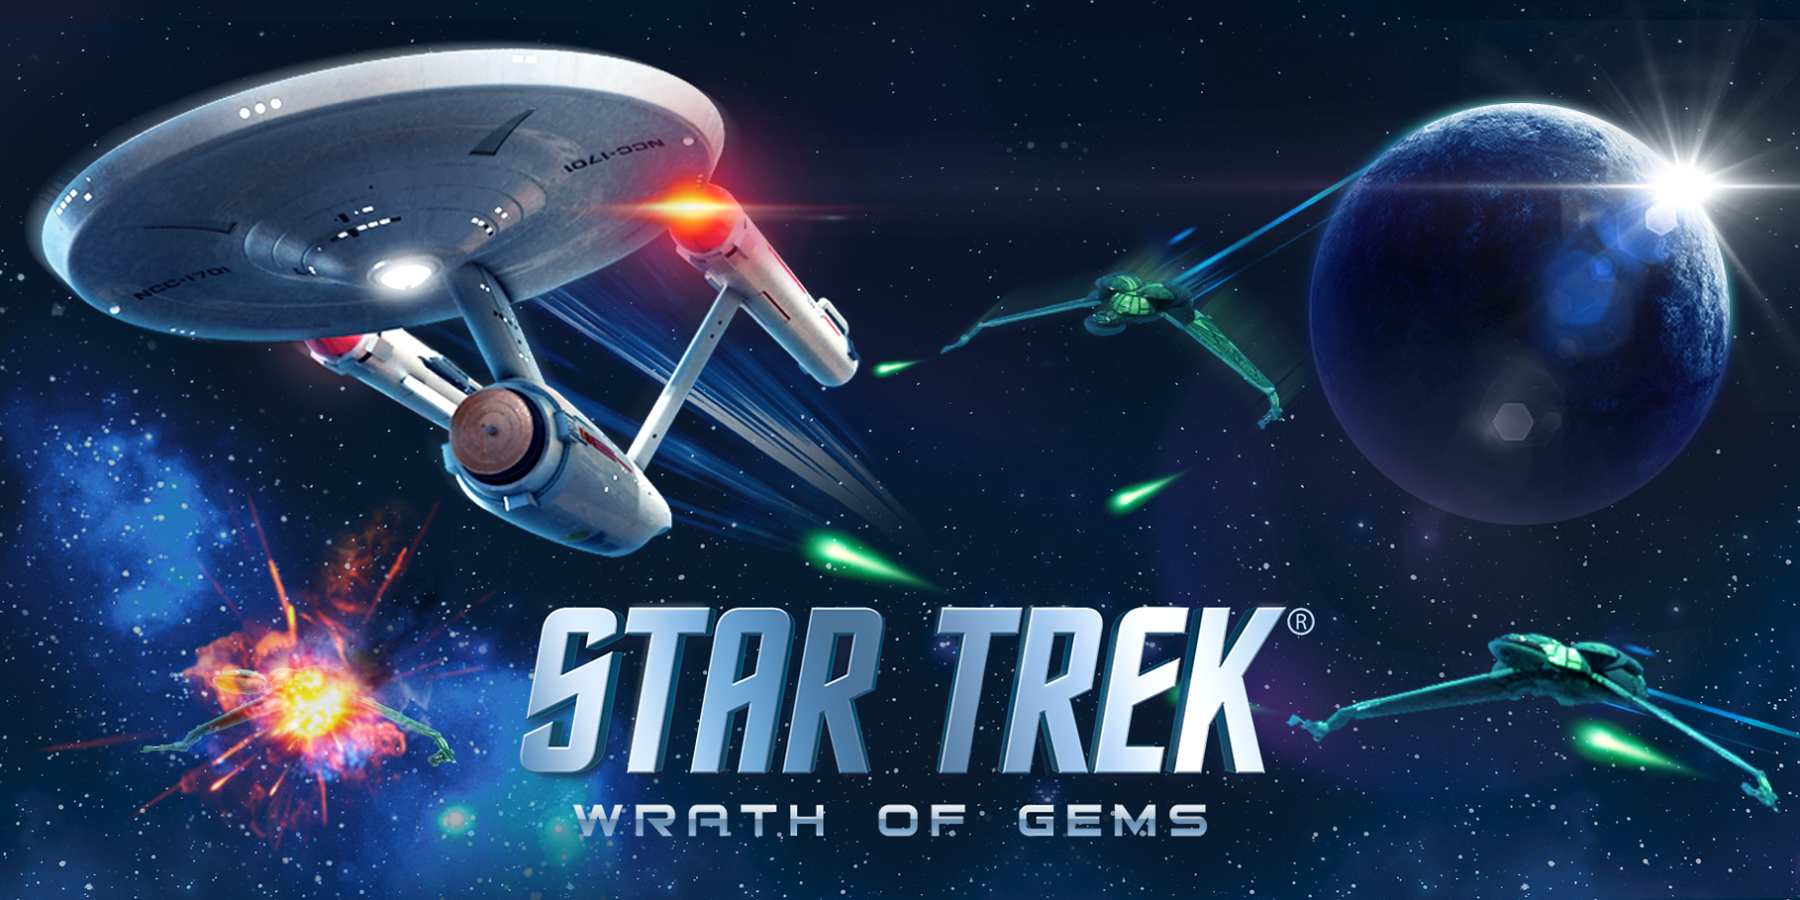 Star Trek ® - Wrath of Gems截图2